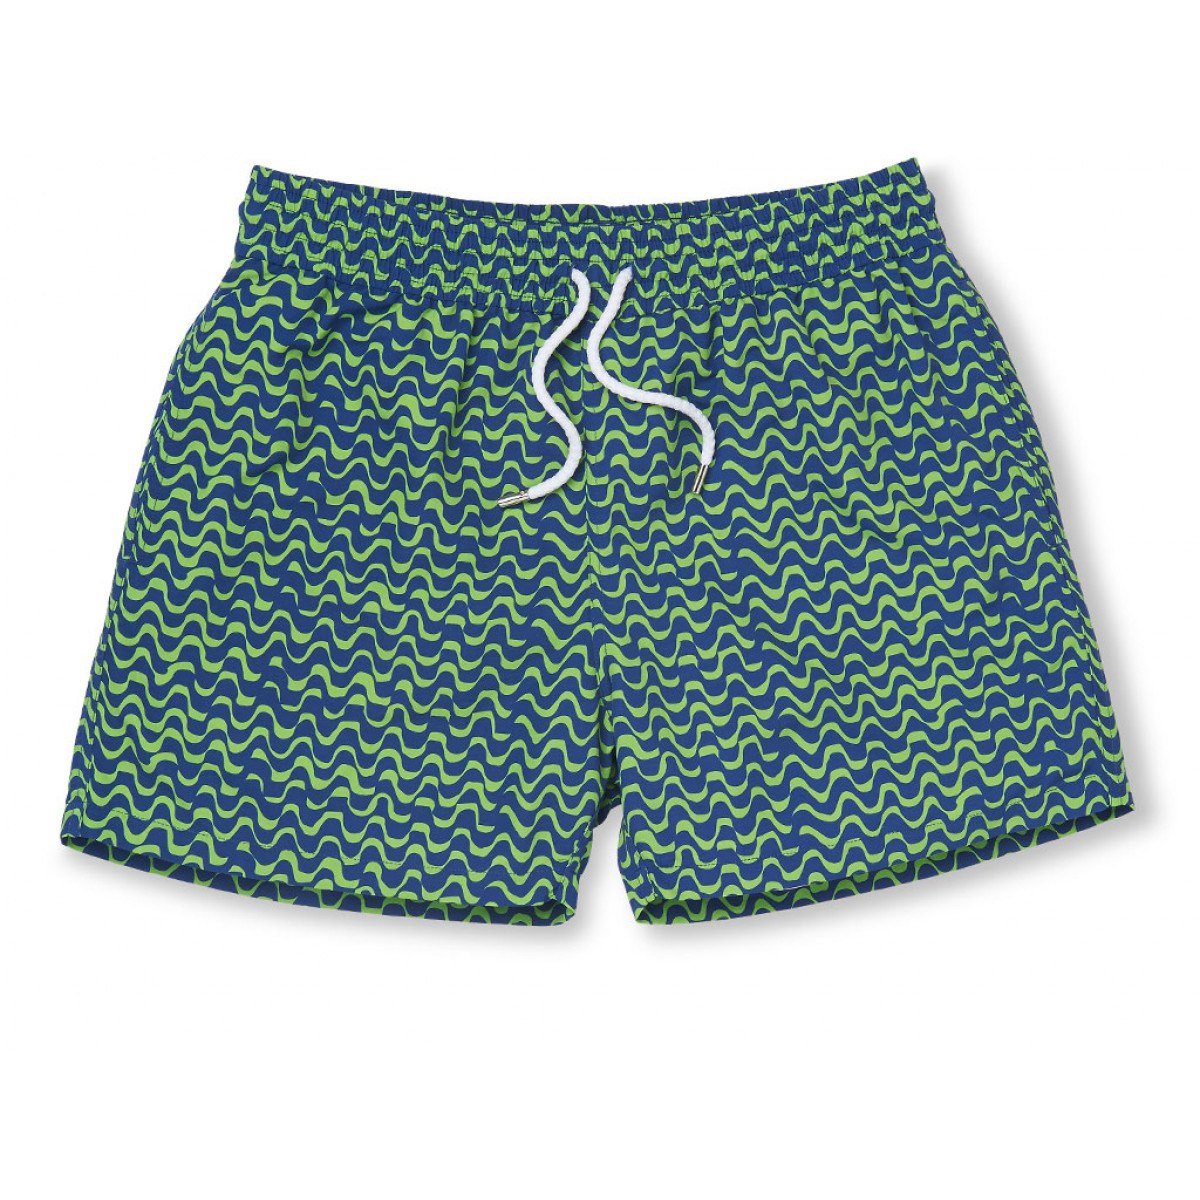 FRESCOBOL CARIOCA Frescobol Trunks Sport Shorts Wave Bossa - Coconut Green/Navy, XXXL